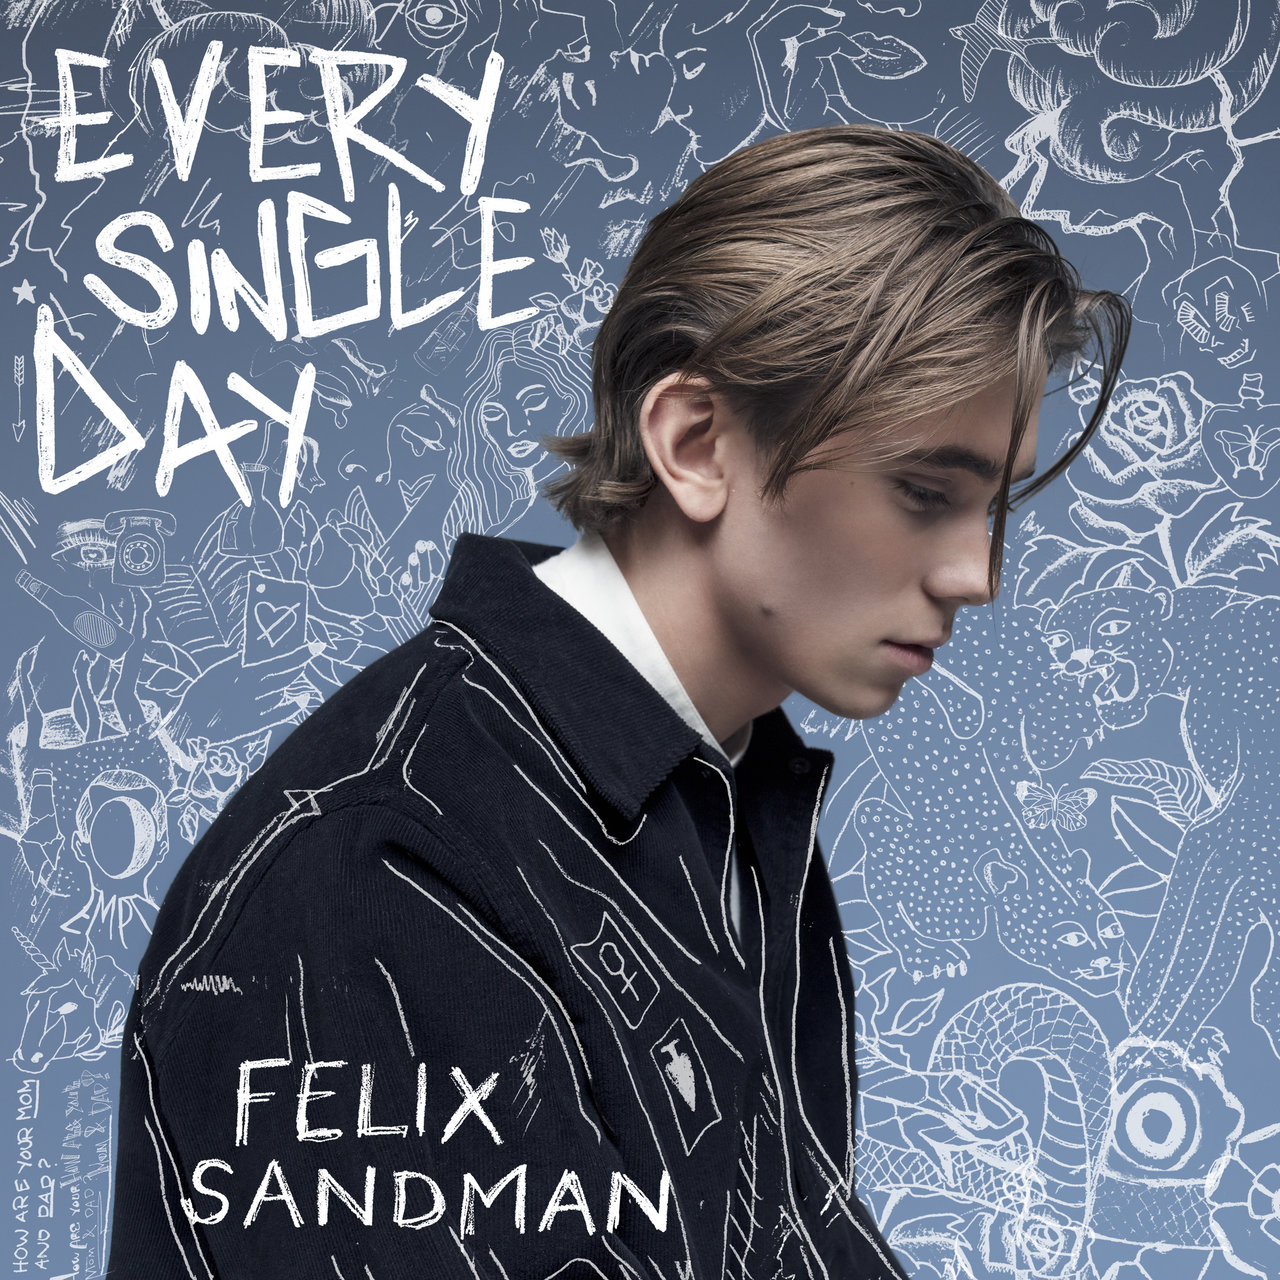 FELIX SANDMAN EVERY SINGLE DAY cover artwork